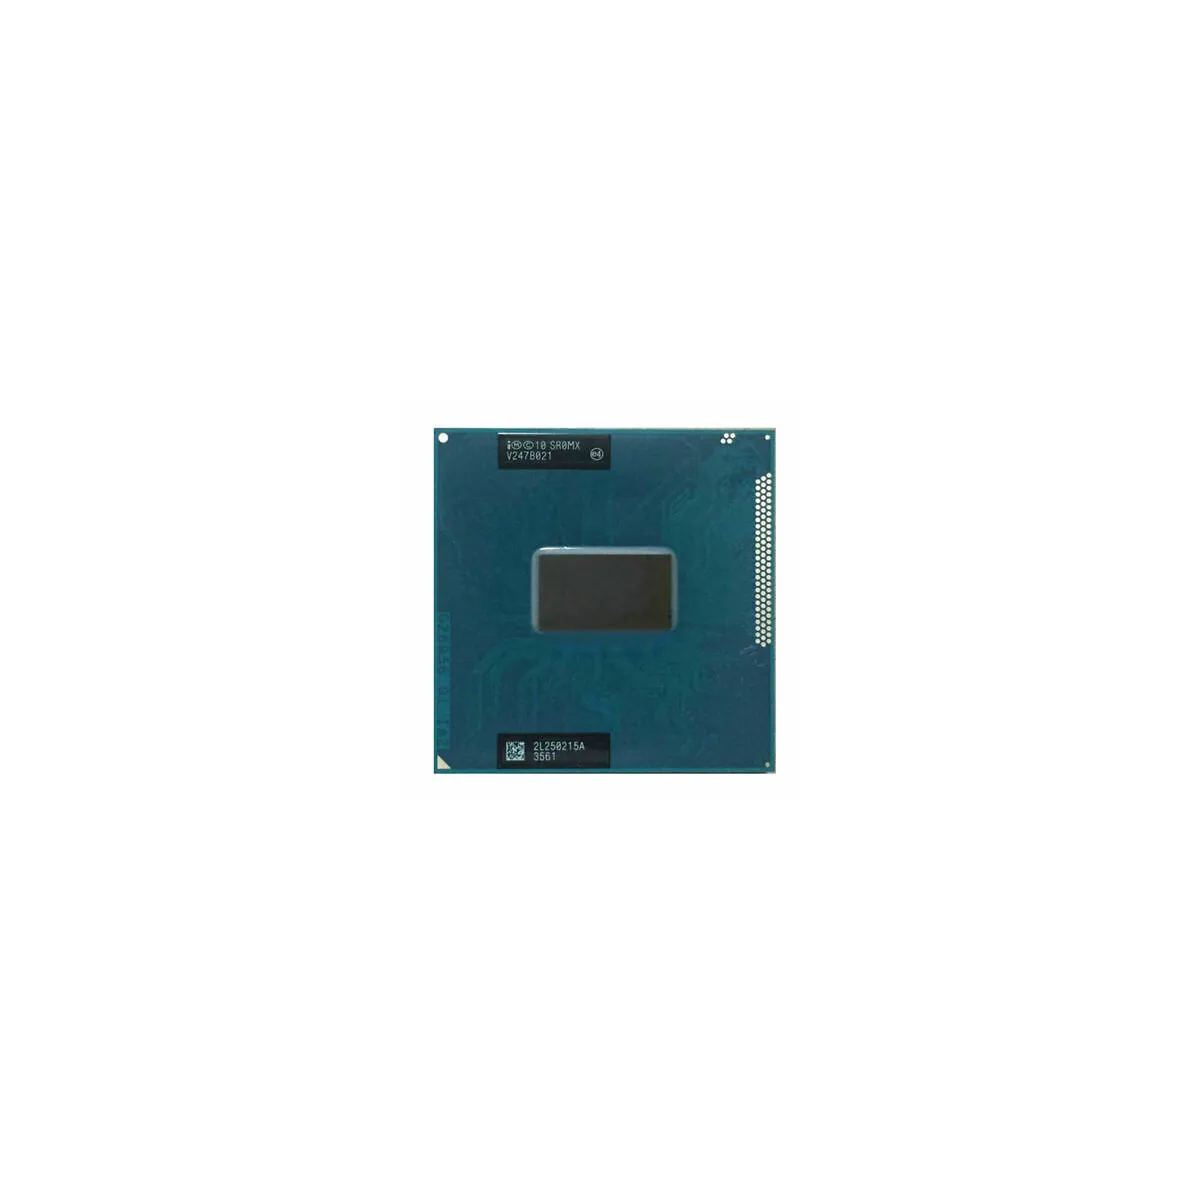 Intel Core i5-3320M (SR0MX) 2.60Ghz Dual (2) Core CPU Processor